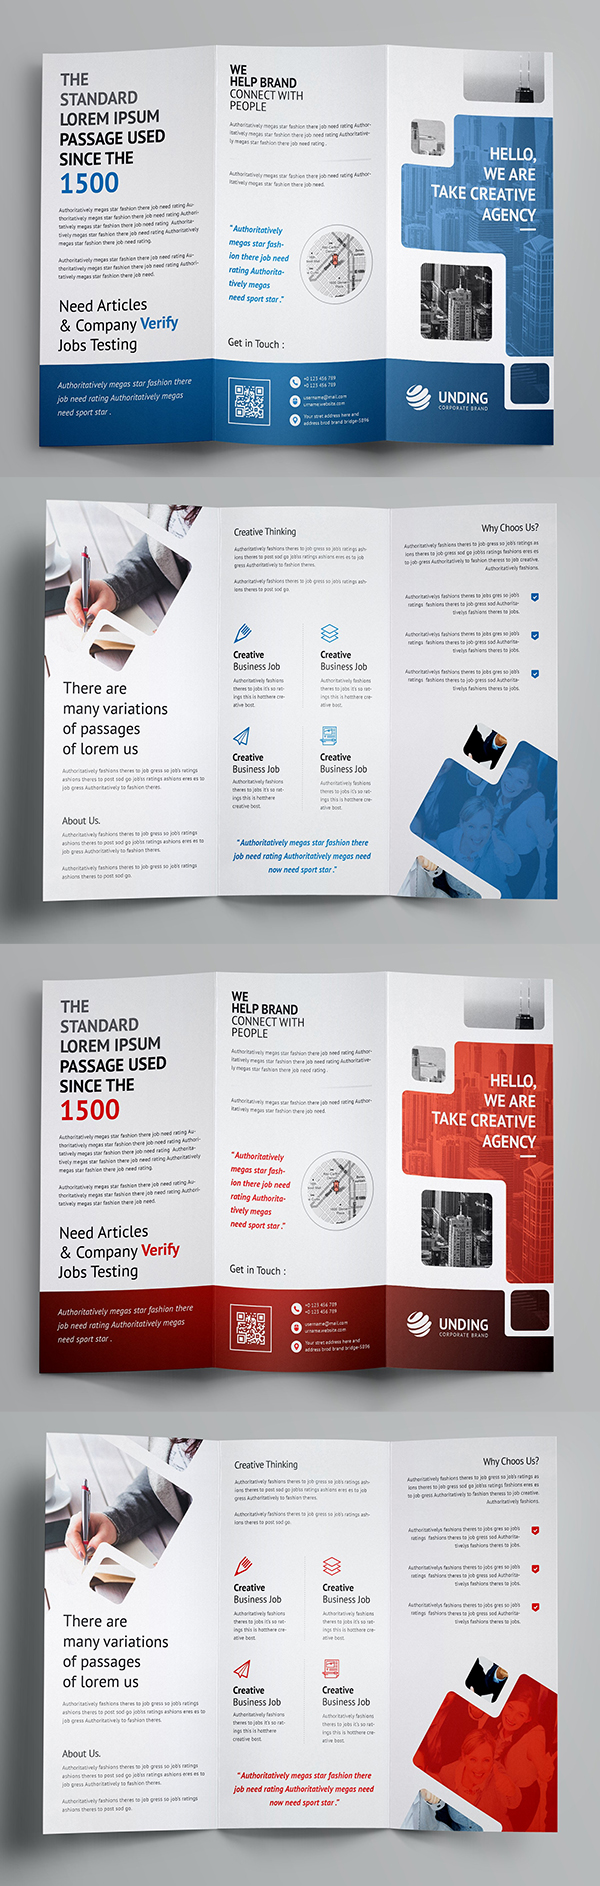 100 Professional Corporate Brochure Templates - 67